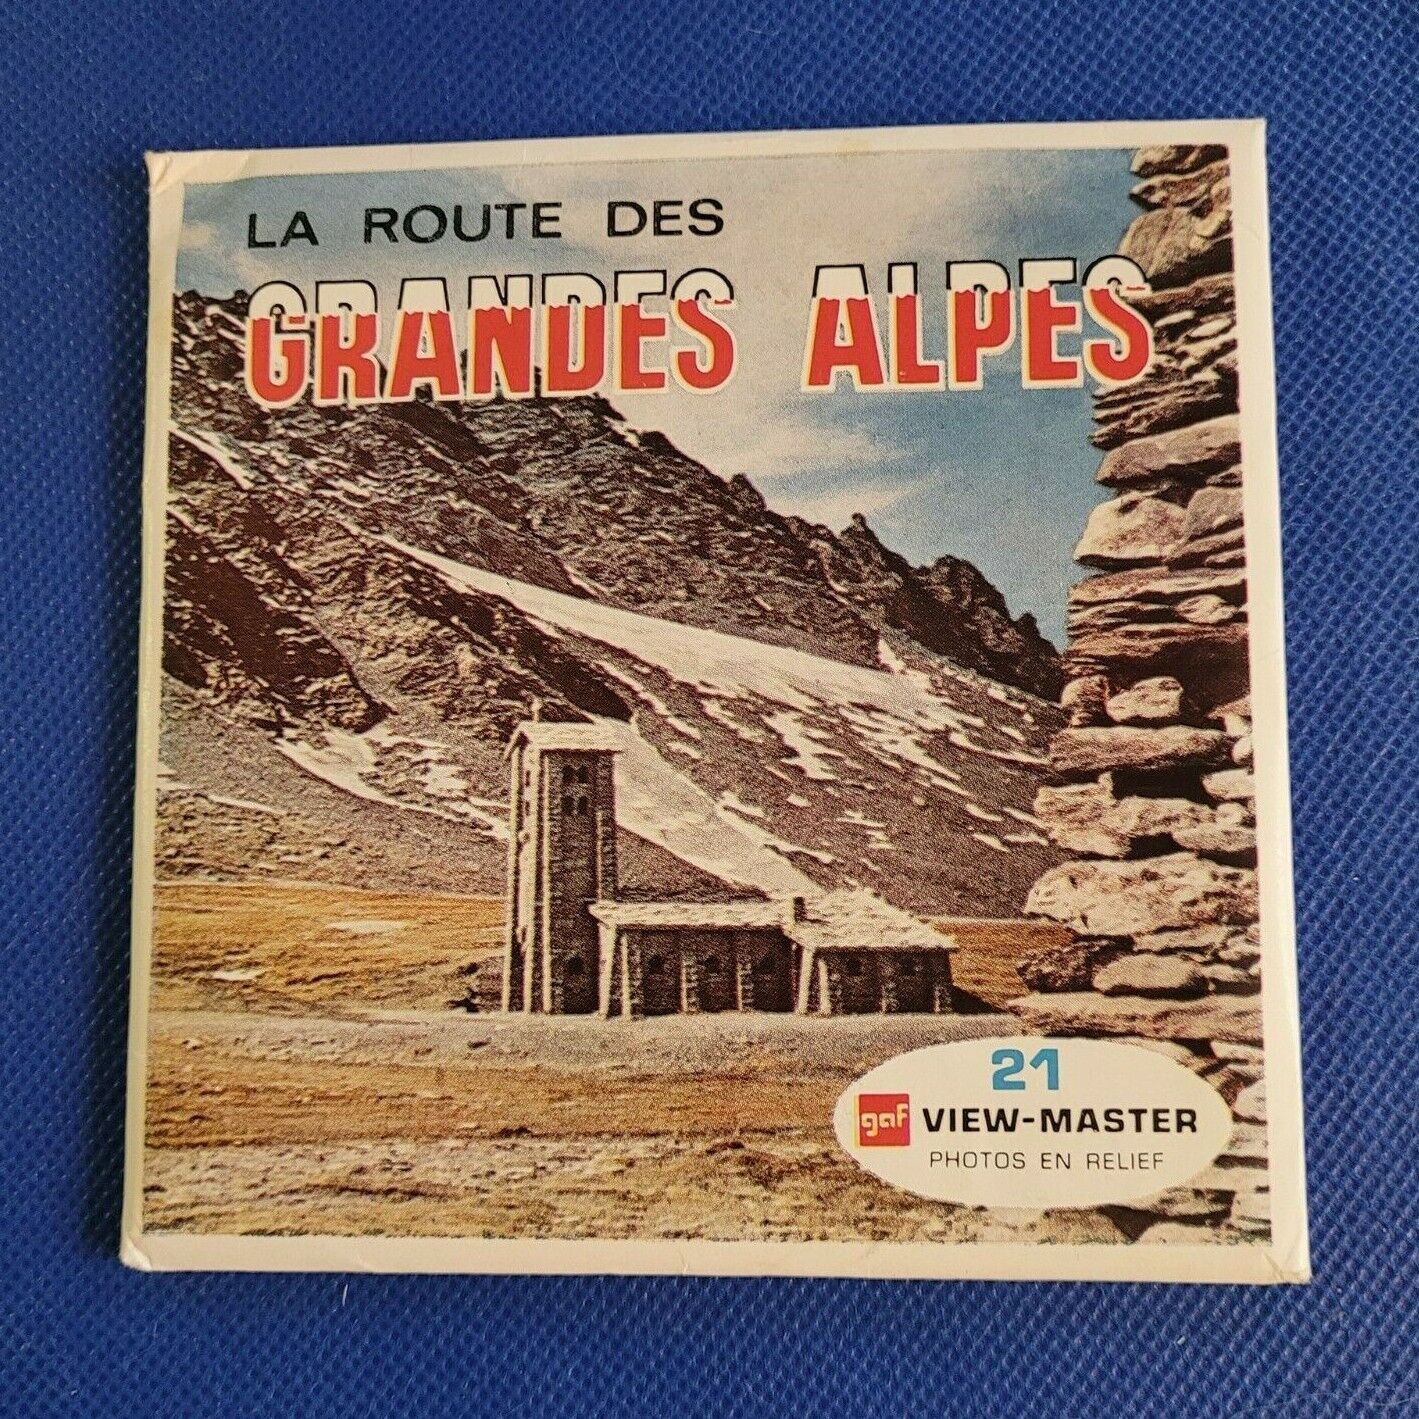 Rare Gaf C213 F La Route des Grandes Alpes Alps France view-master Reels Packet